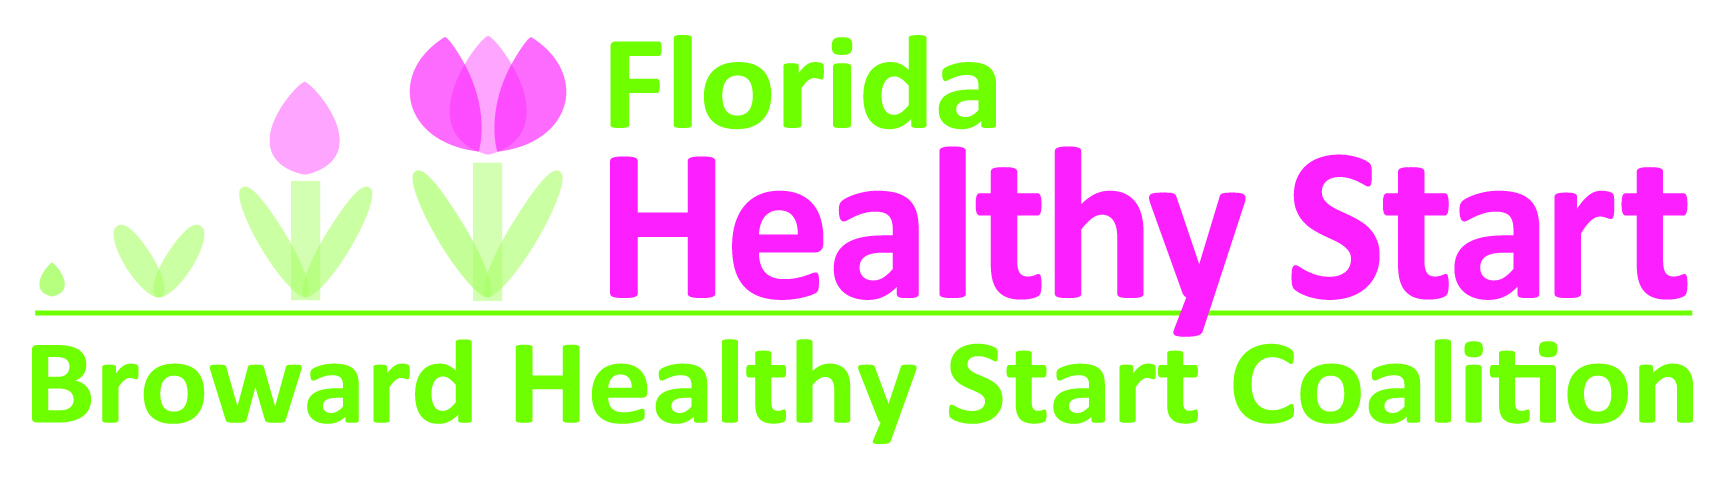 Florida Healthy Start Broward Coalition logo